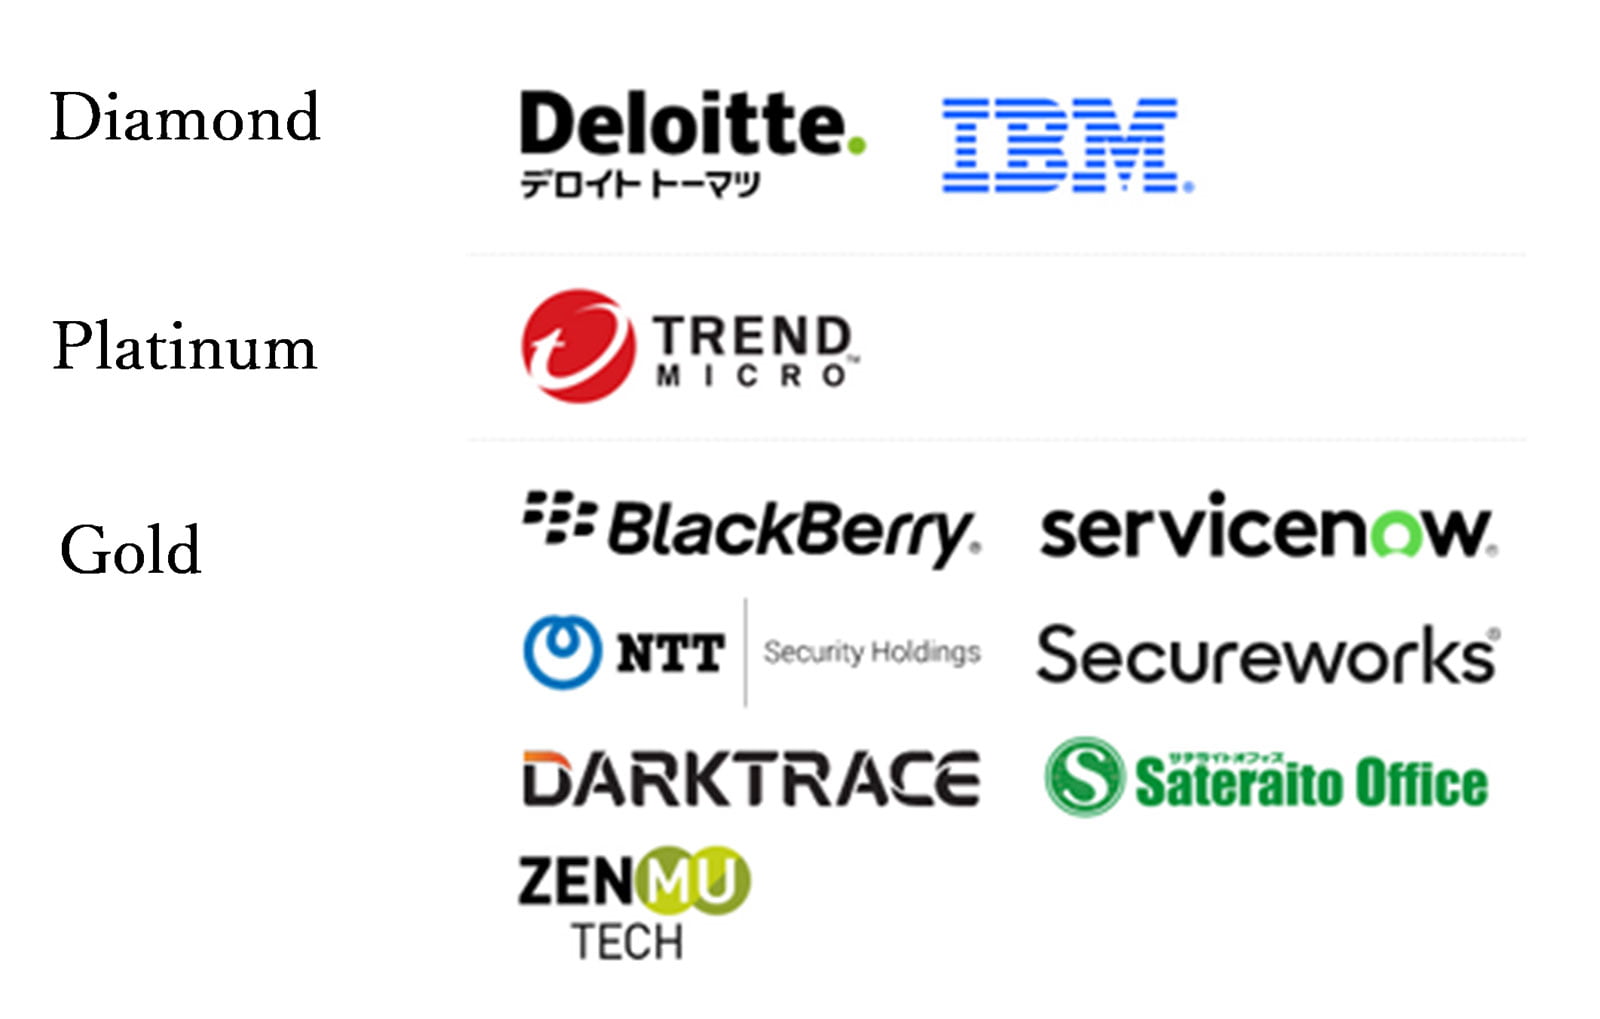 Sponsors:Deloitte,IBM,TREND MICRO,BlackBerry,servicenow,NTT,Secureworks,DARKTRACE,Sateraito Office and ZENMU TECH